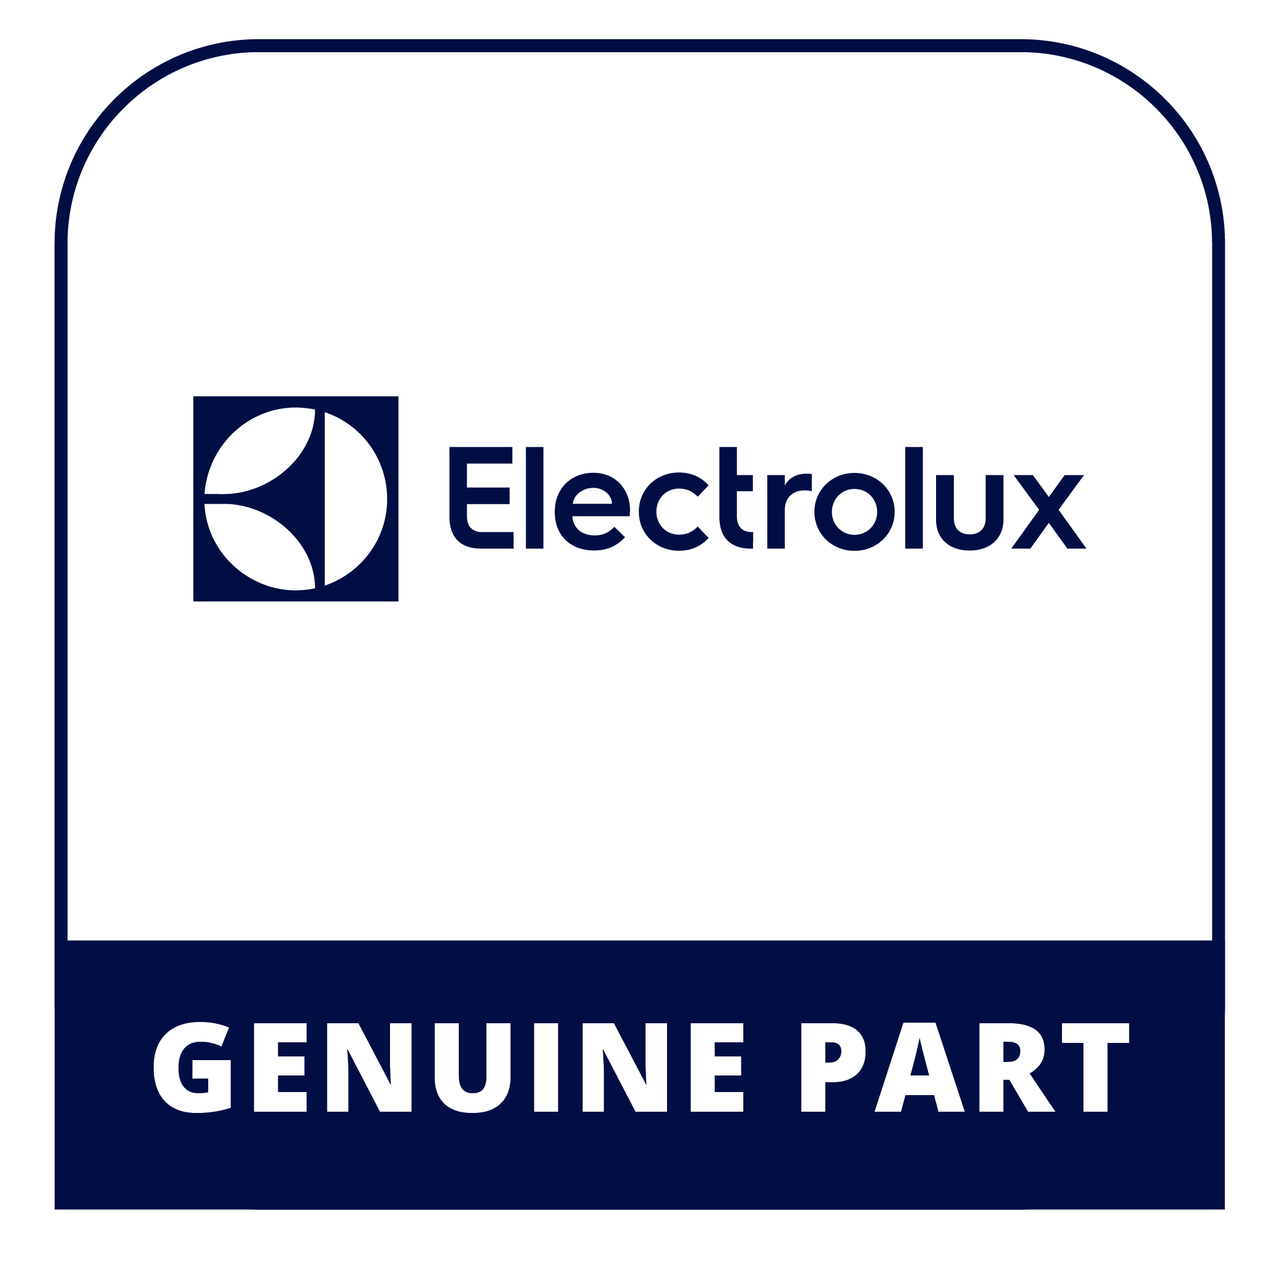 Frigidaire - Electrolux 301036 Insert Nut - Genuine Electrolux Part